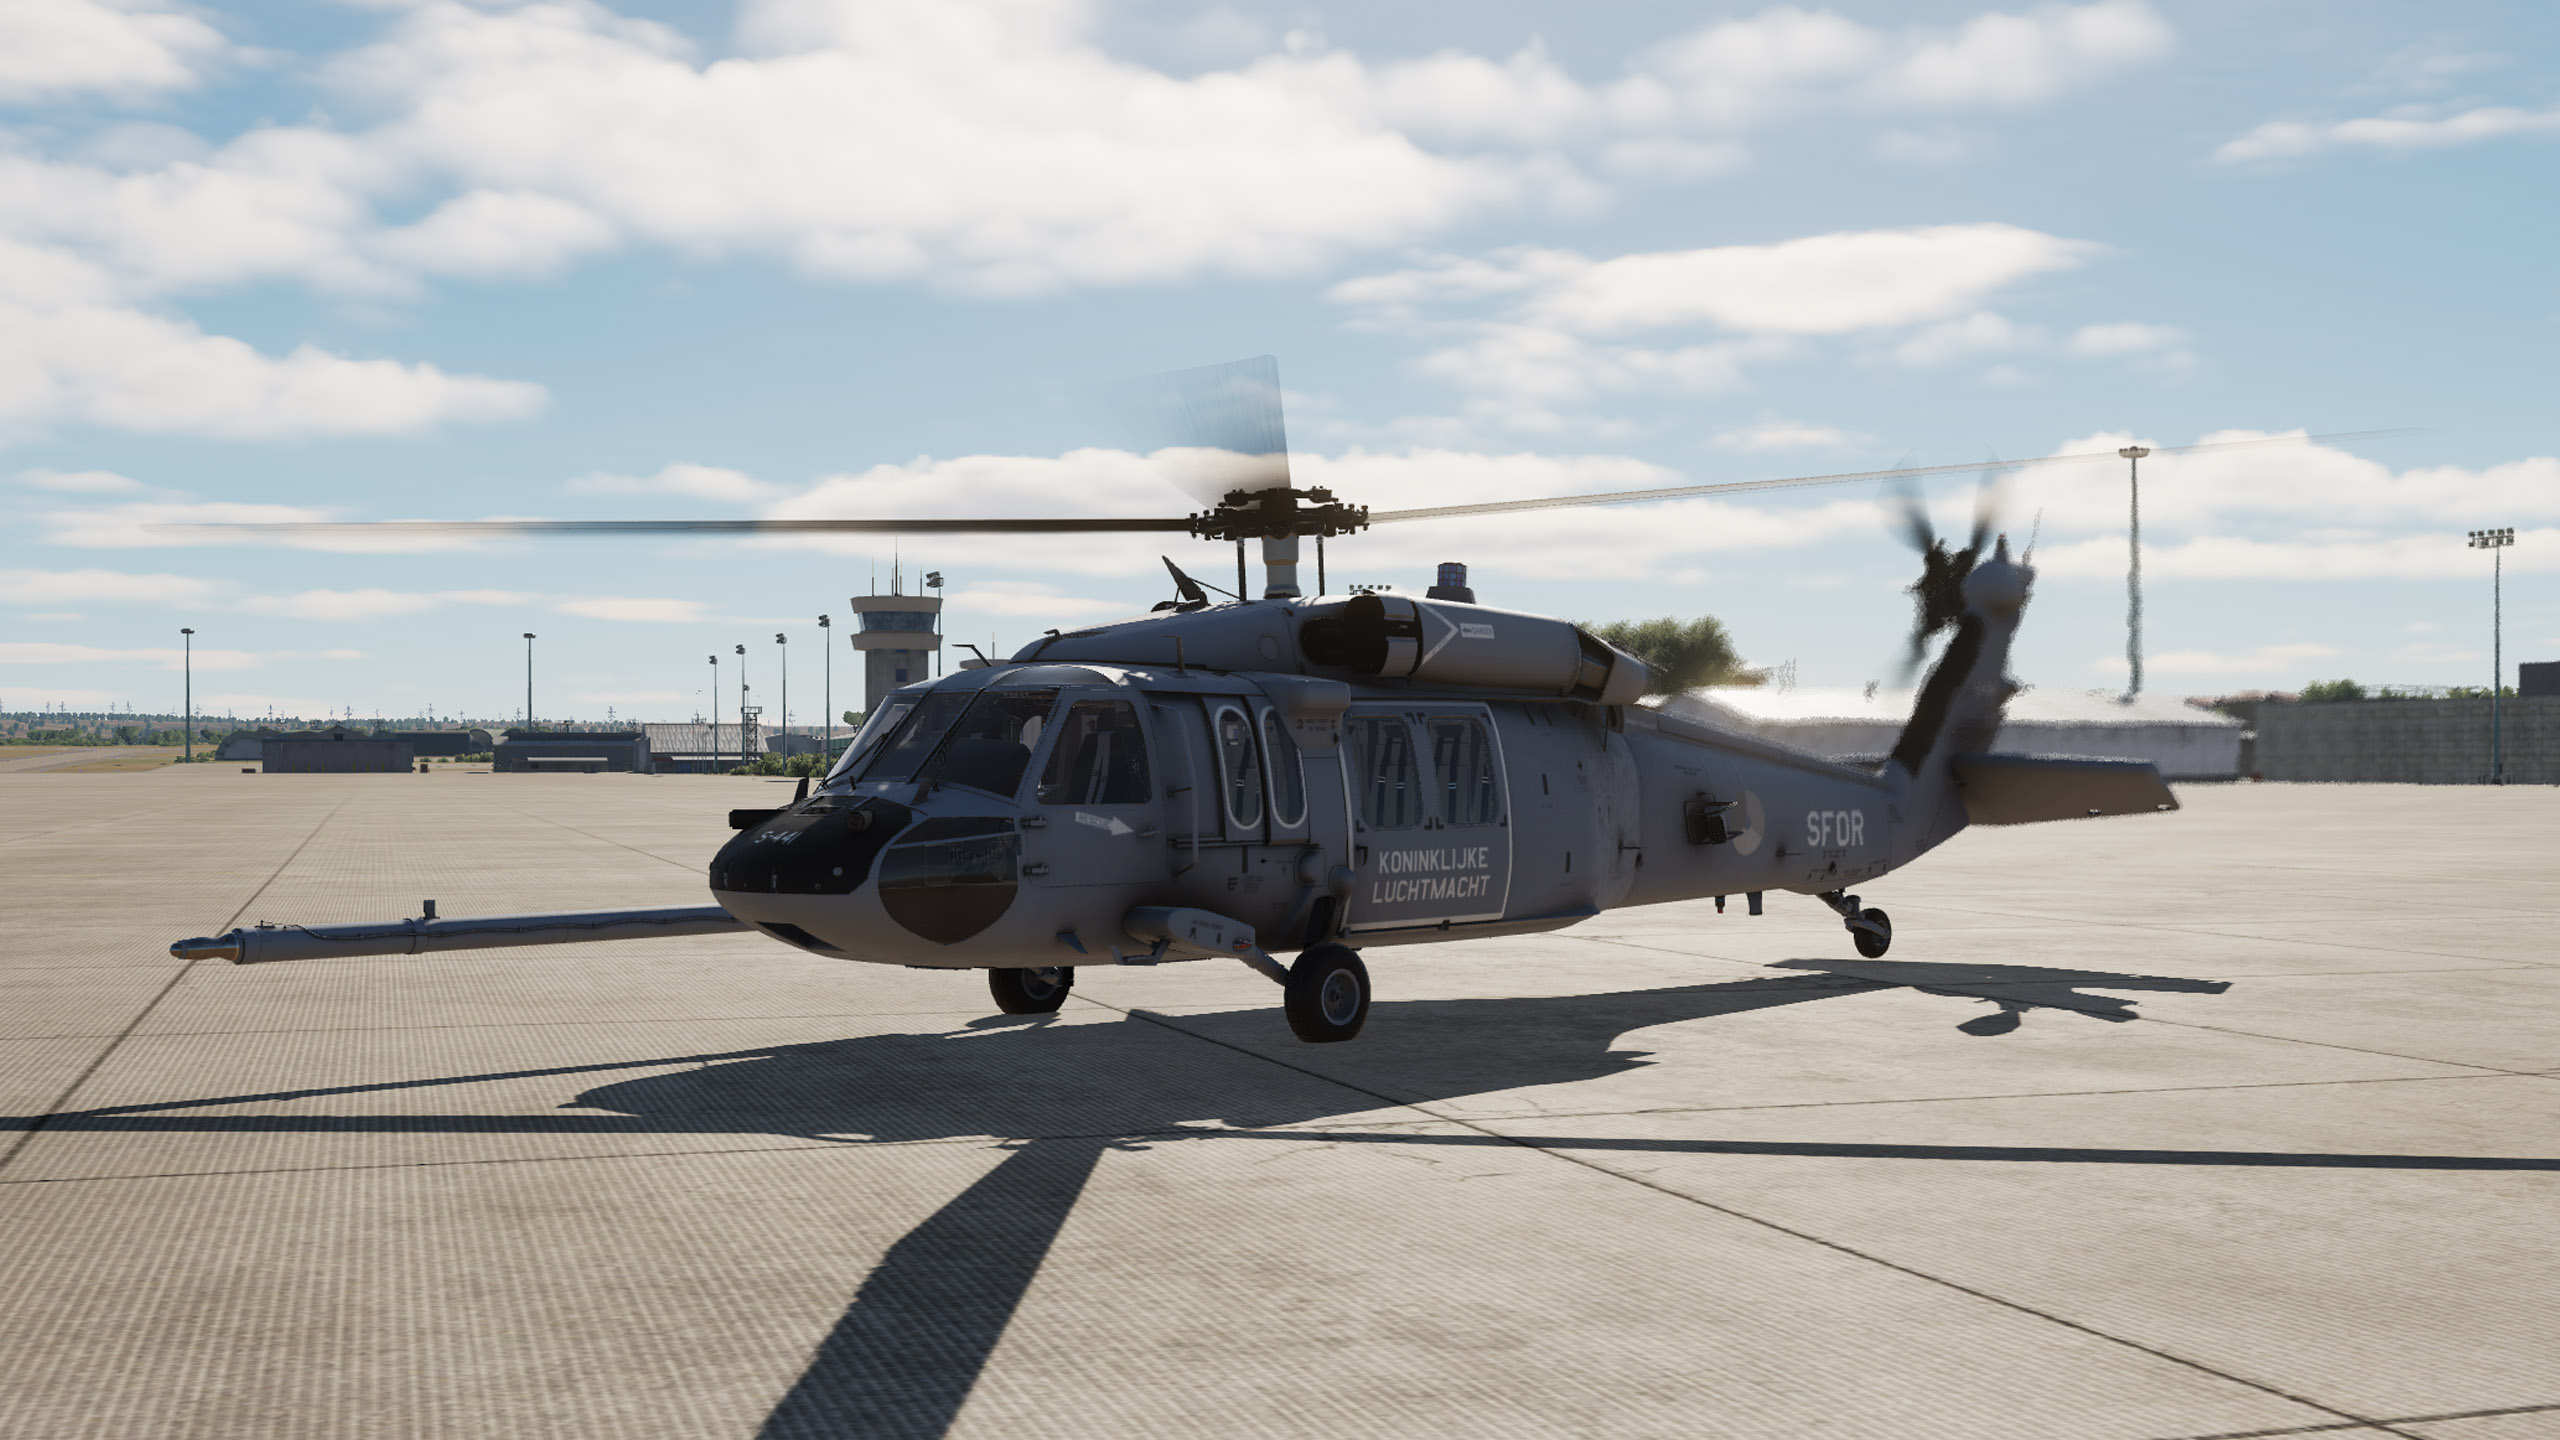 UH-60L - RNLAF 300 SQN "S-441" (fictional) 